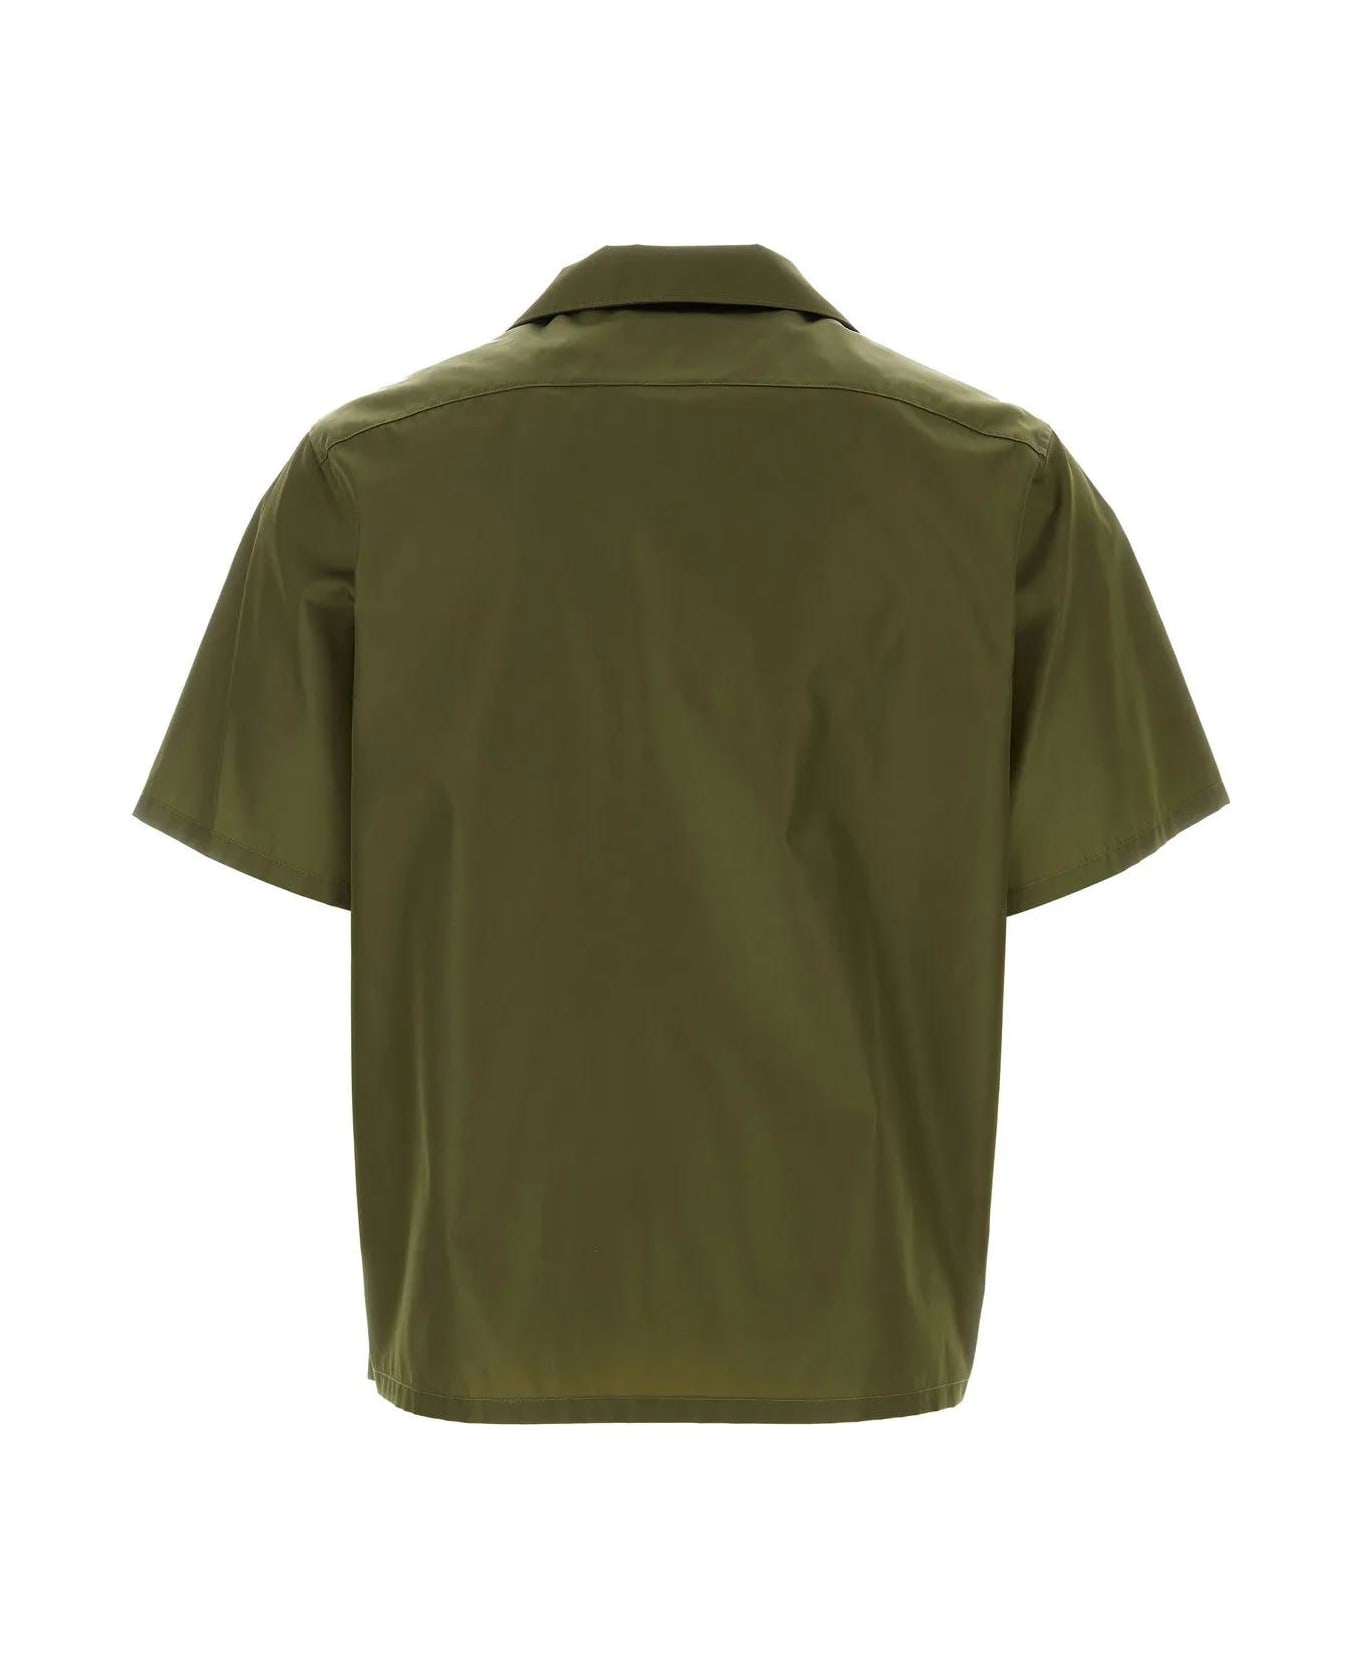 Prada Olive Green Re-nylon Shirt - Loden